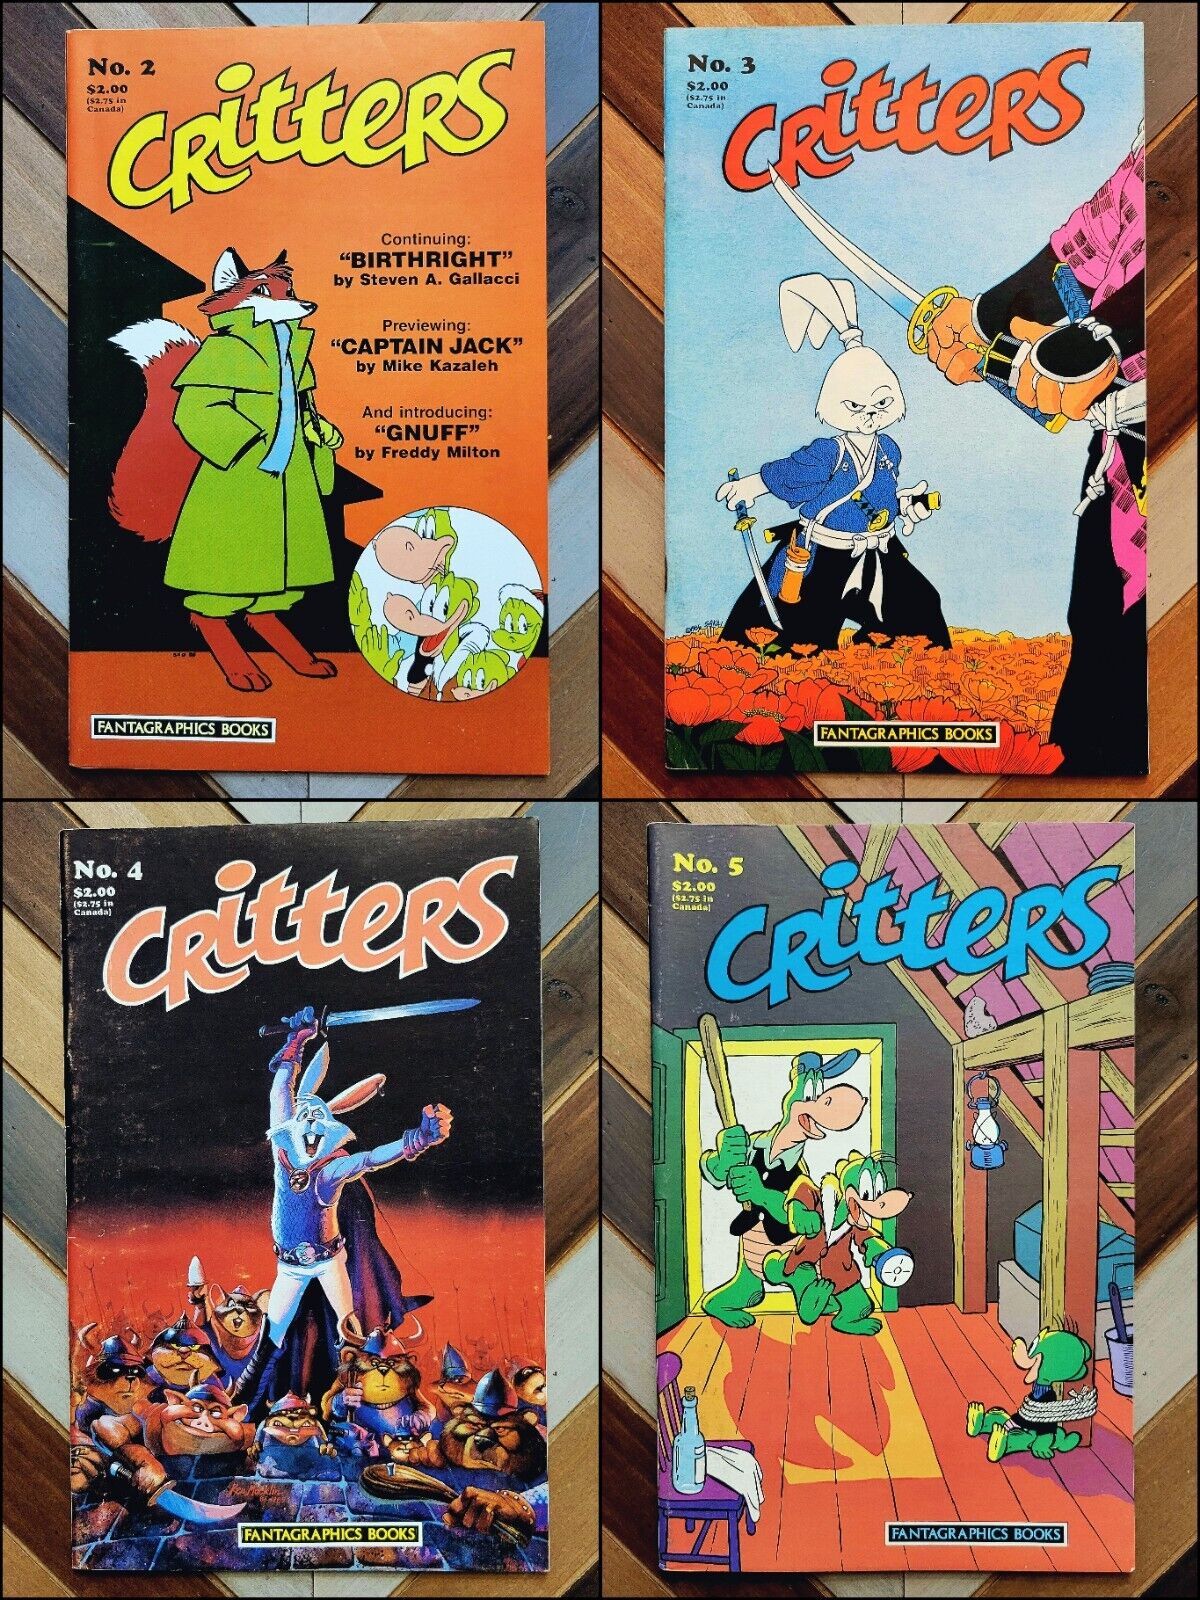 CRITTERS #2-5 (Fantagraphics 1986) USAGI YOJIMBO by Stan Sakai GNUFF & CAPT JACK